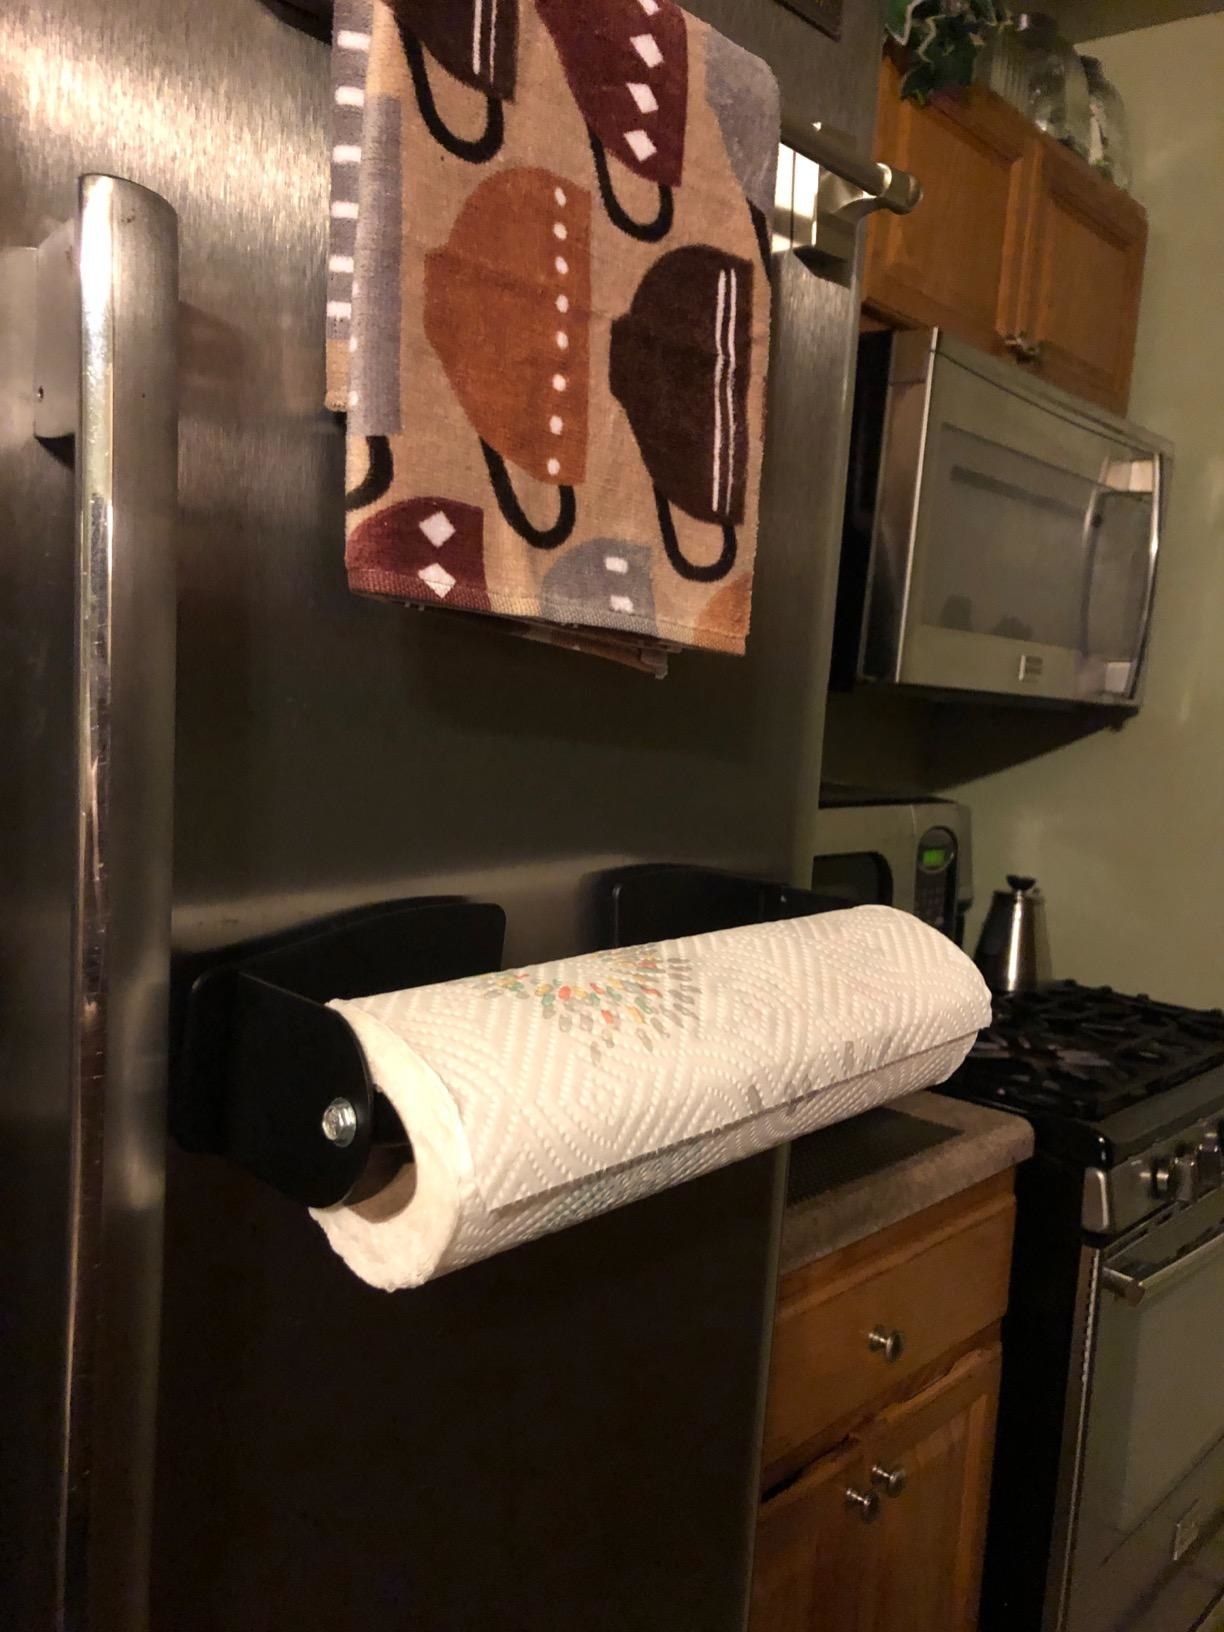 A reader photo of a paper towel holder stuck to a fridge